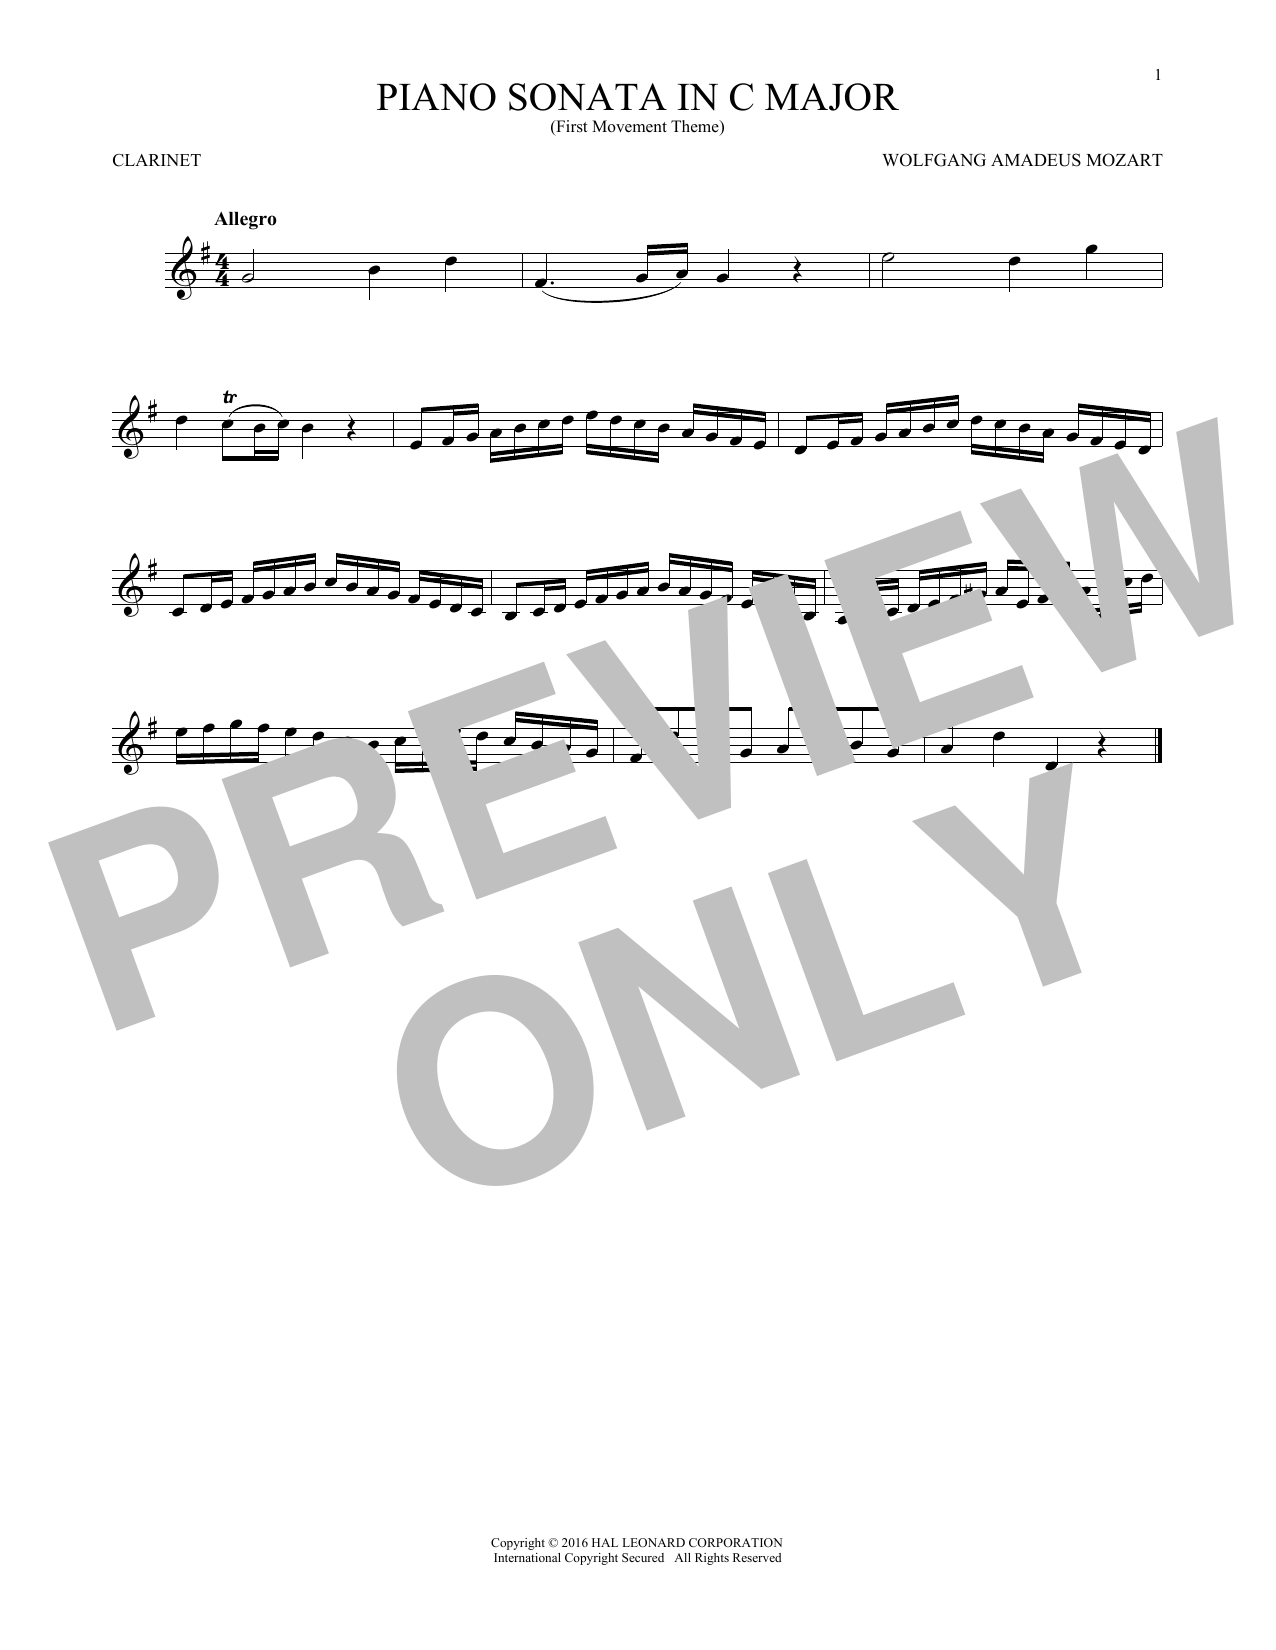 Wolfgang Amadeus Mozart Piano Sonata In C Major Sheet Music Notes & Chords for Violin - Download or Print PDF